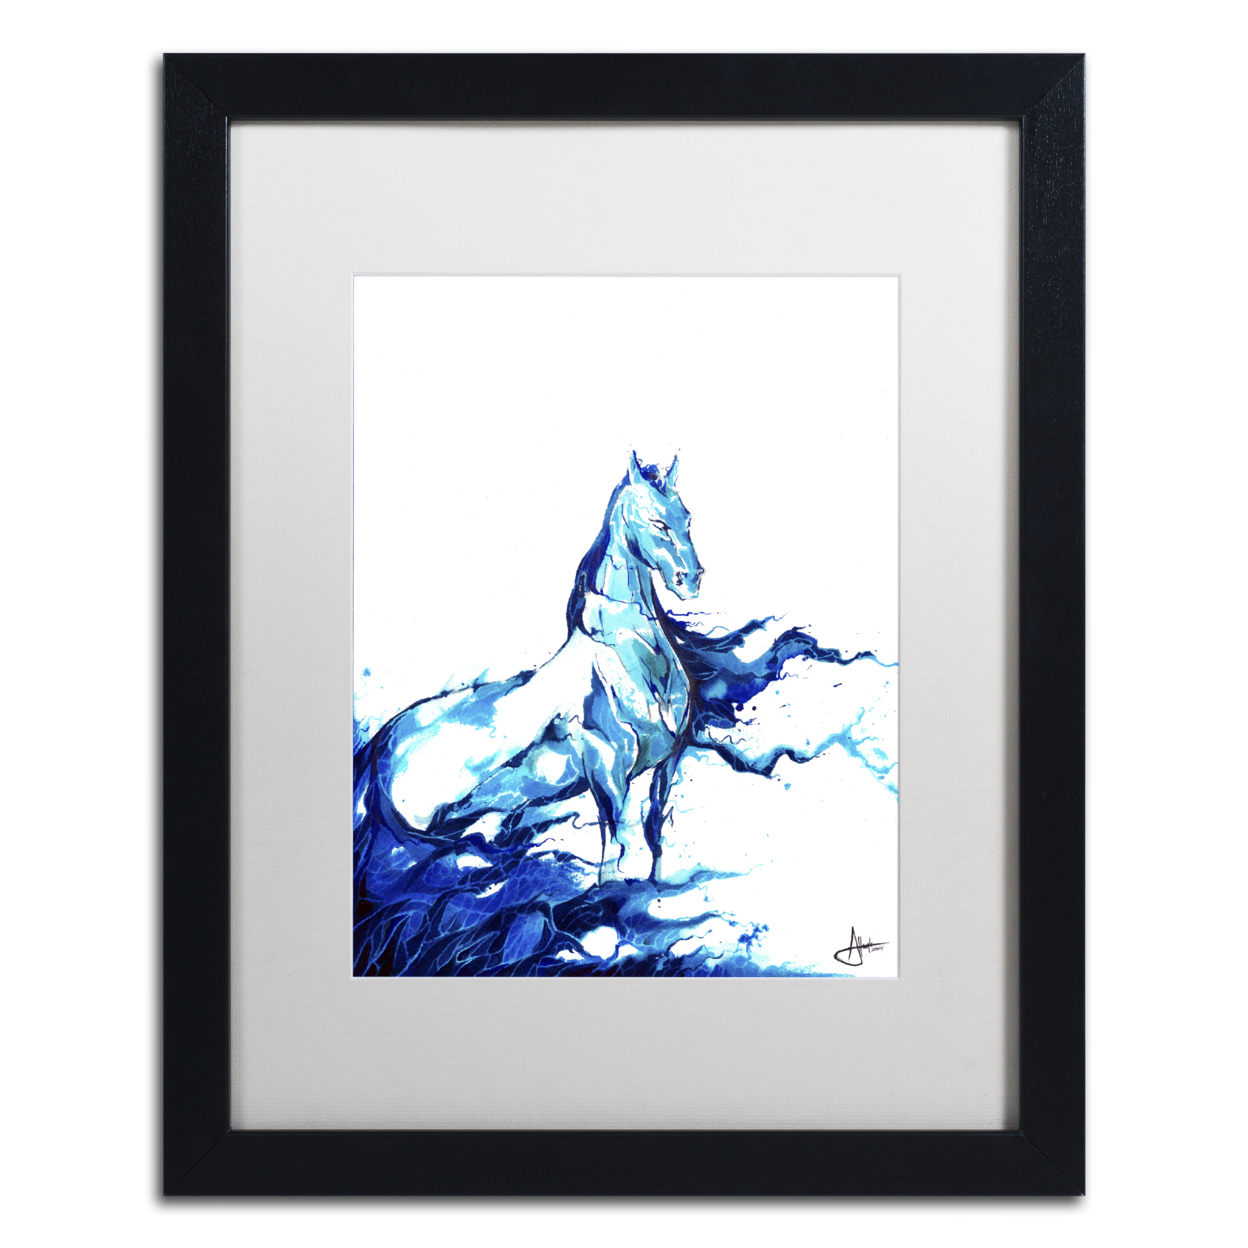 Marc Allante 'Poseidon' Black Wooden Framed Art 18 X 22 Inches